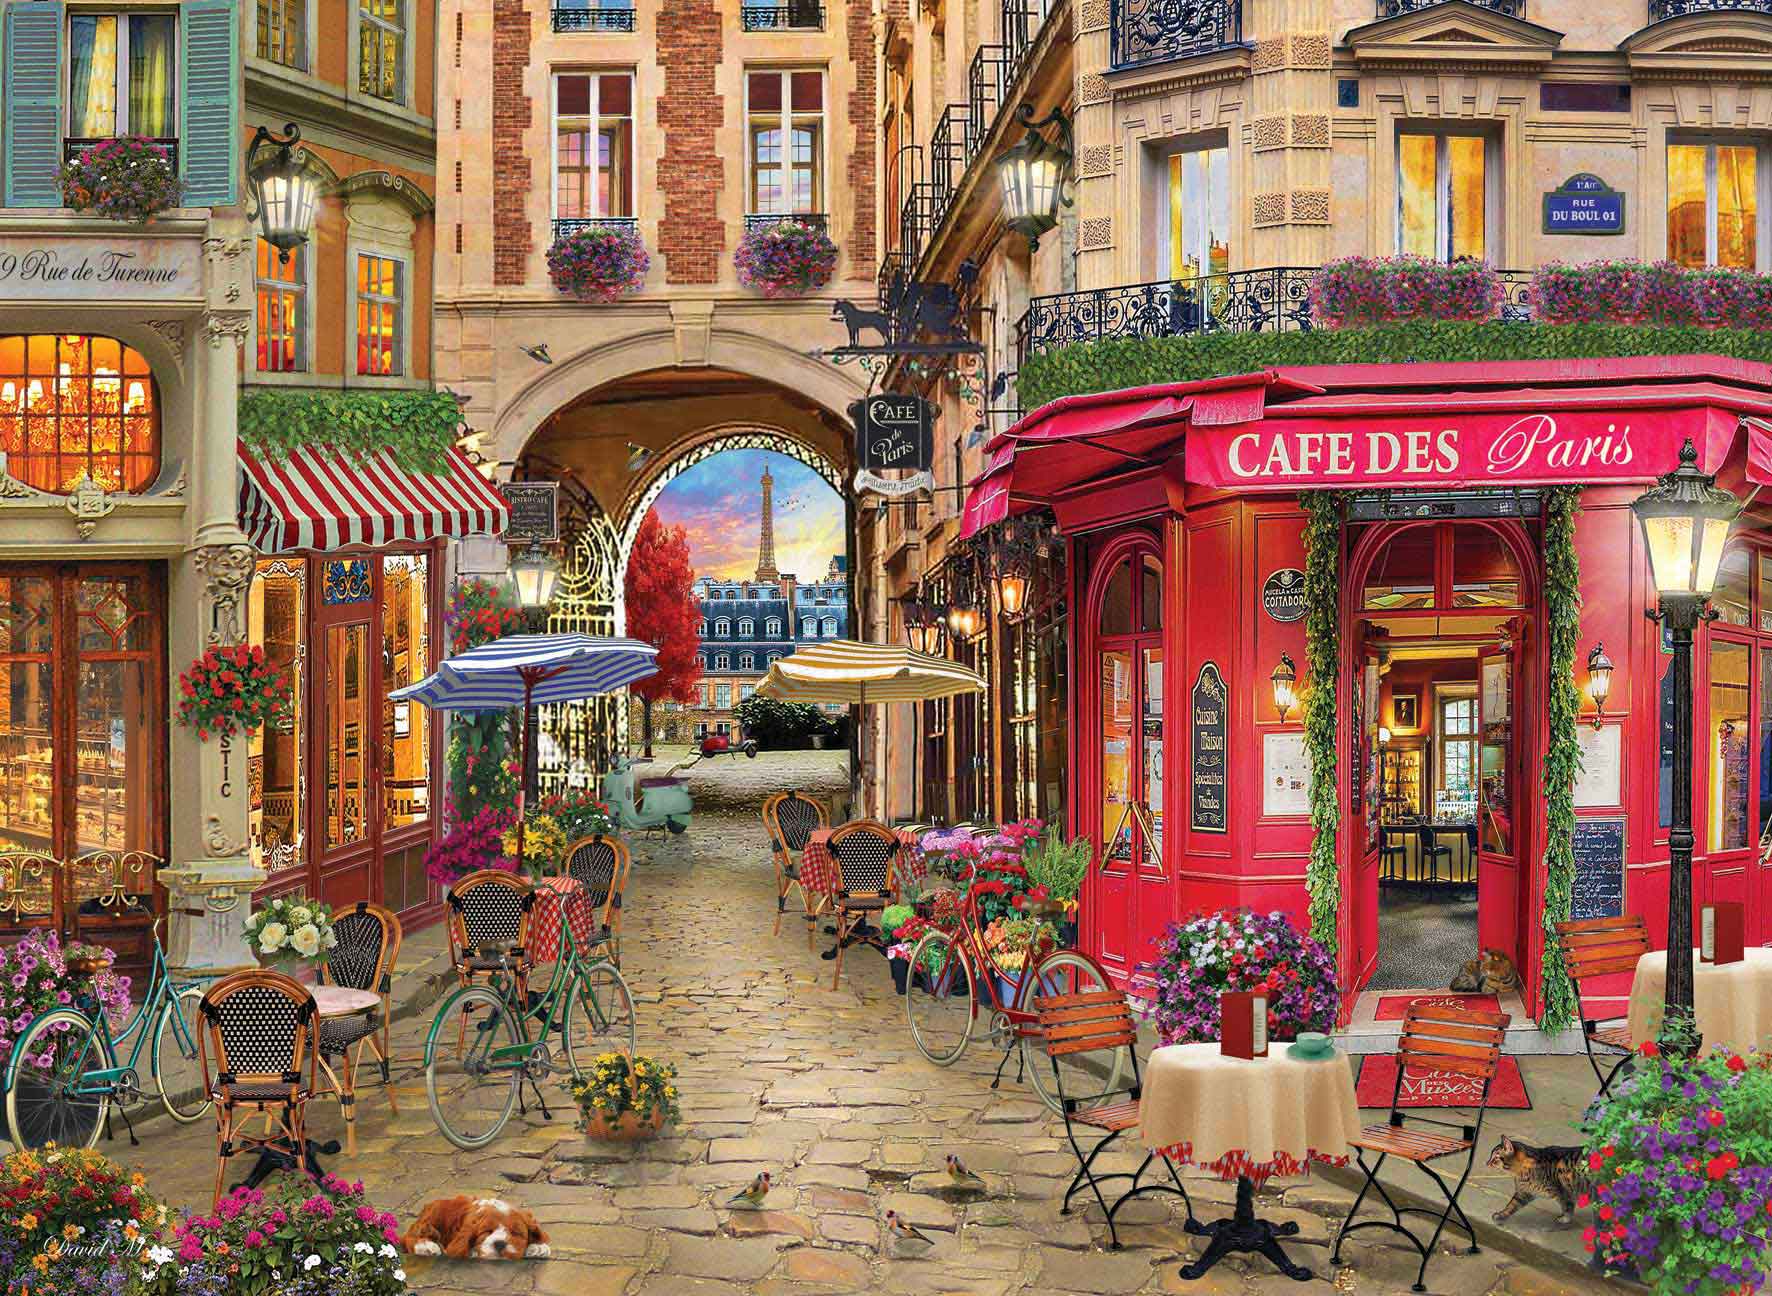 Puzzle Anatolian Café de Paris de 1000 Peças